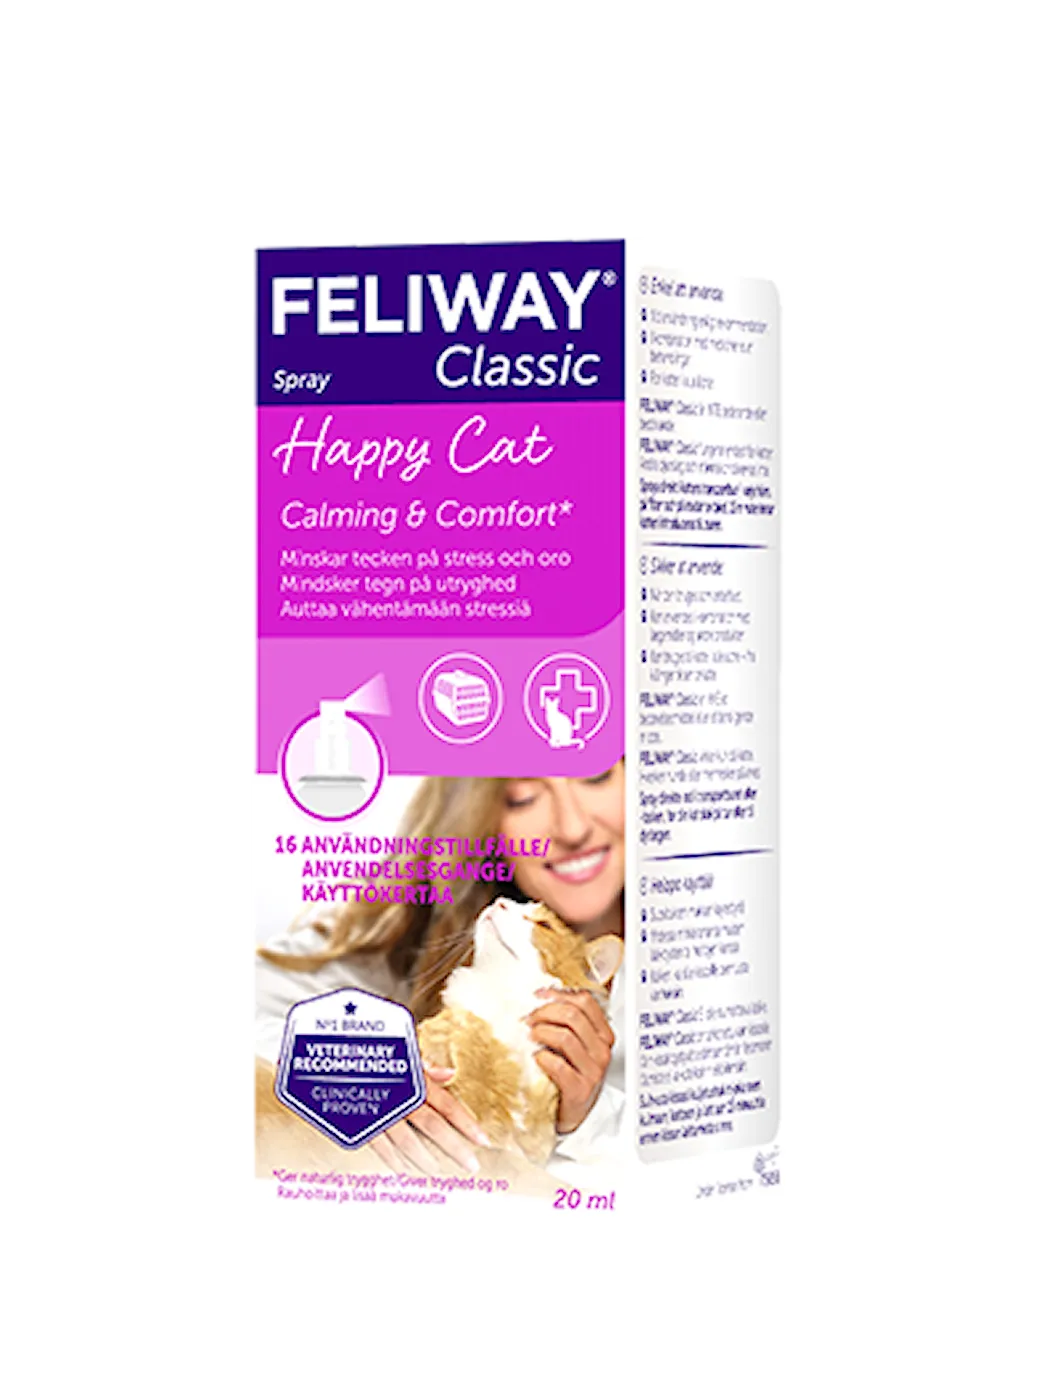 Feliway Classic Spray Pheromone